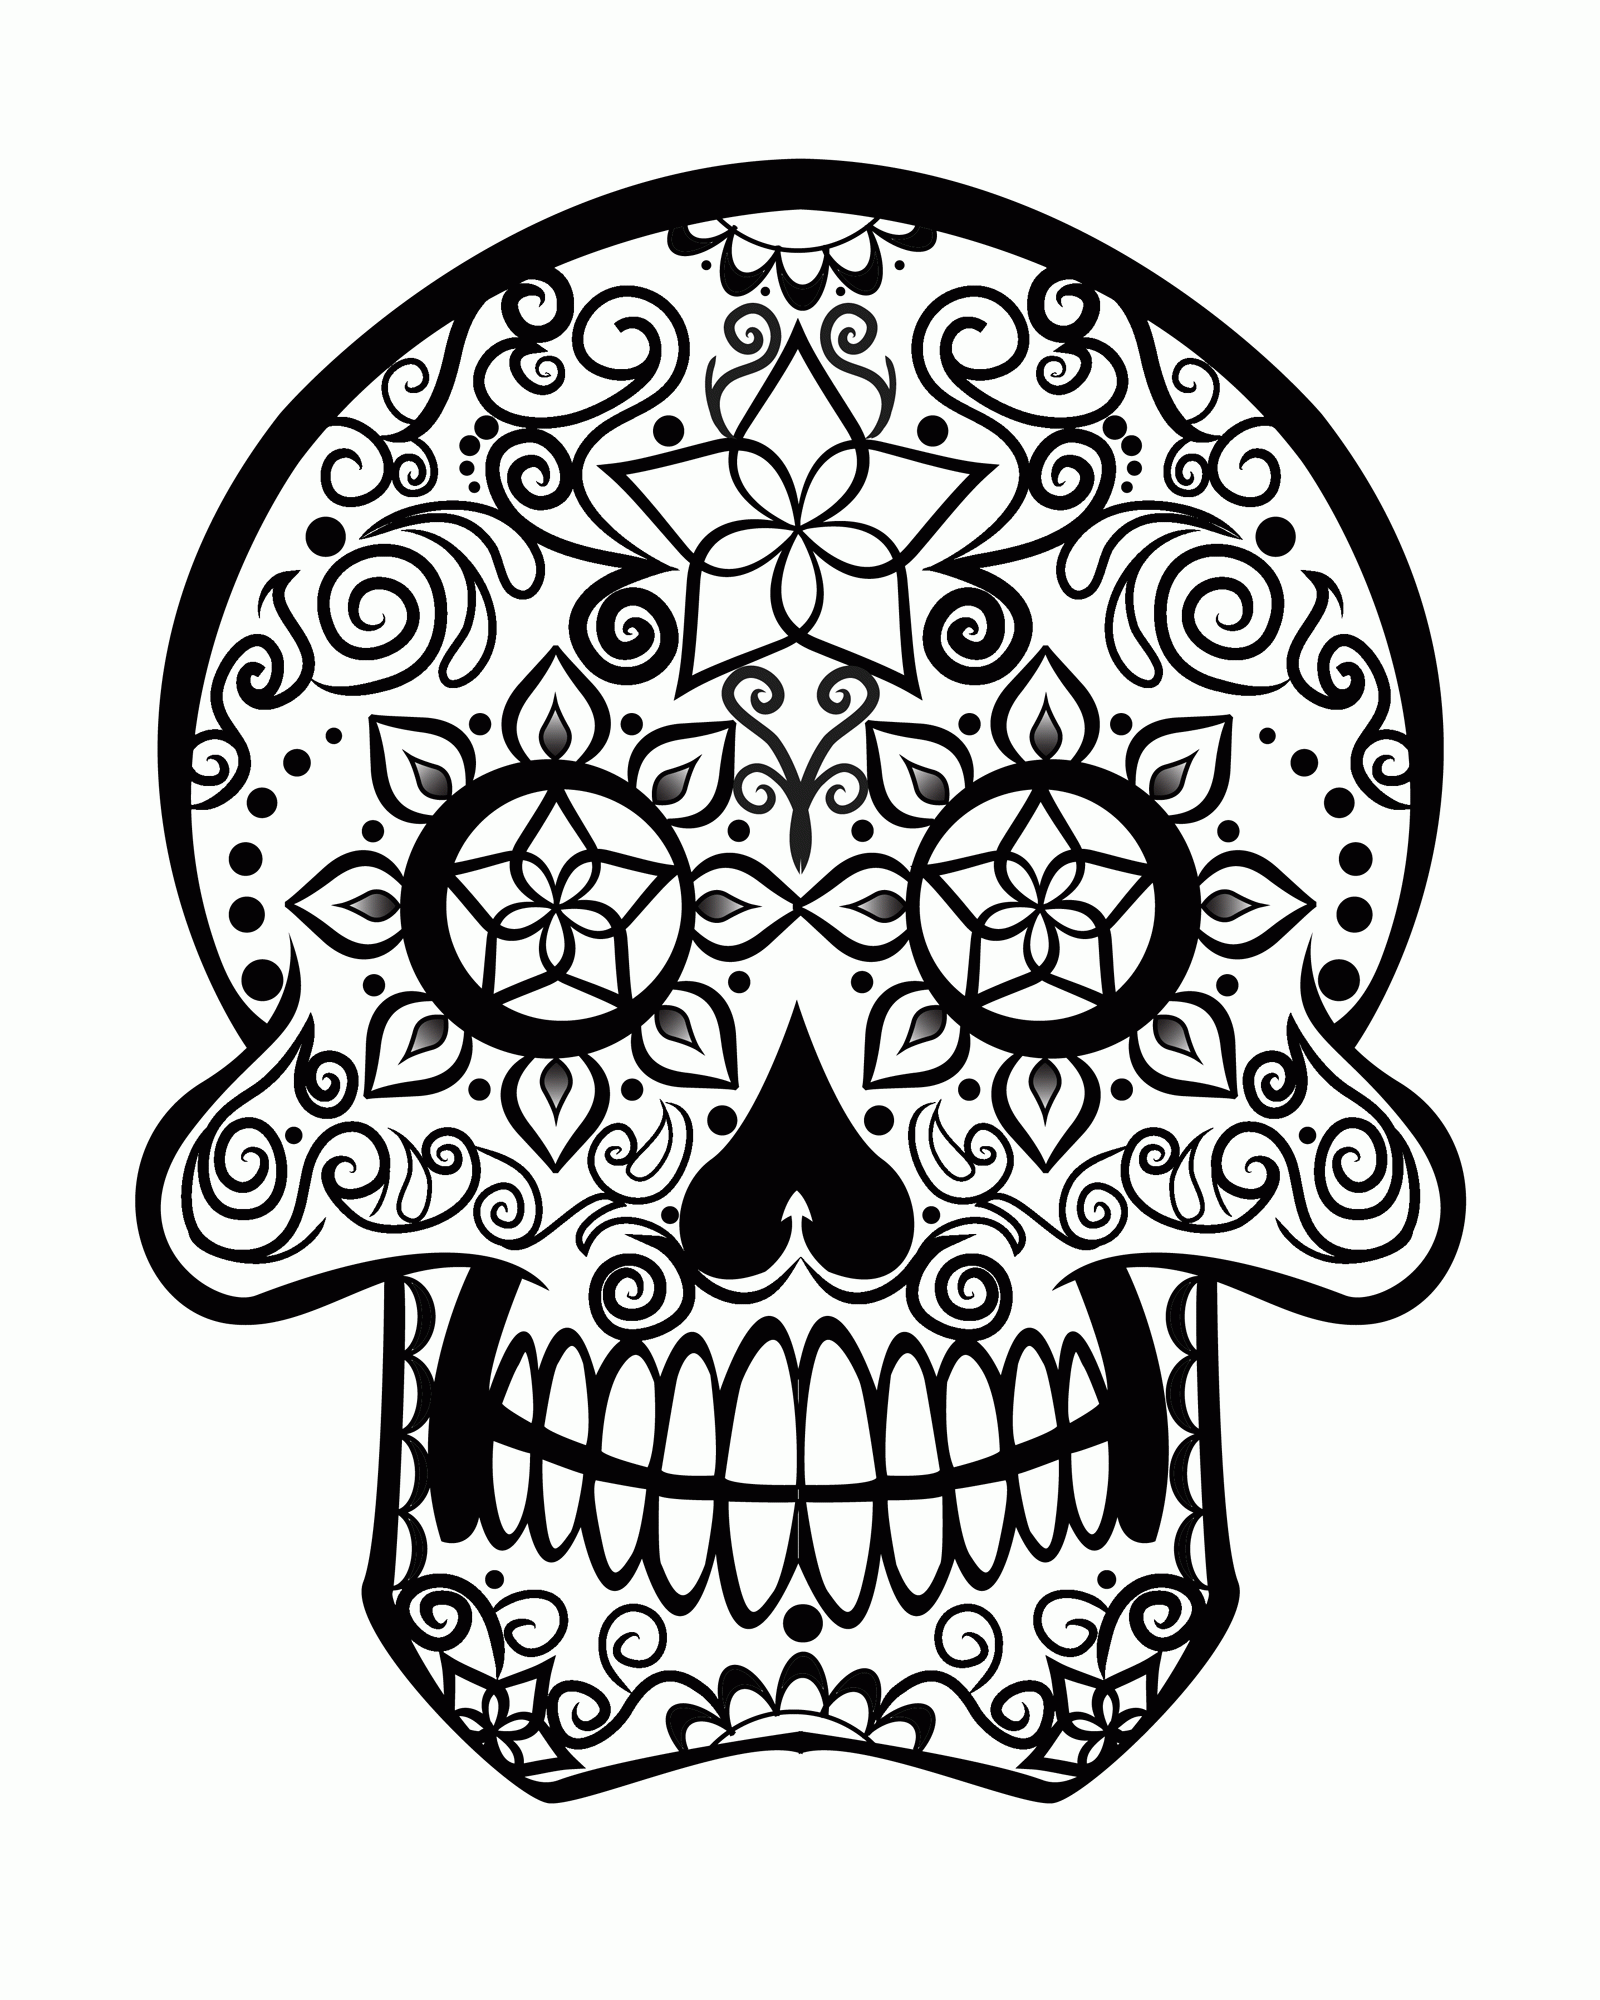 Sugar Skull Coloring Page